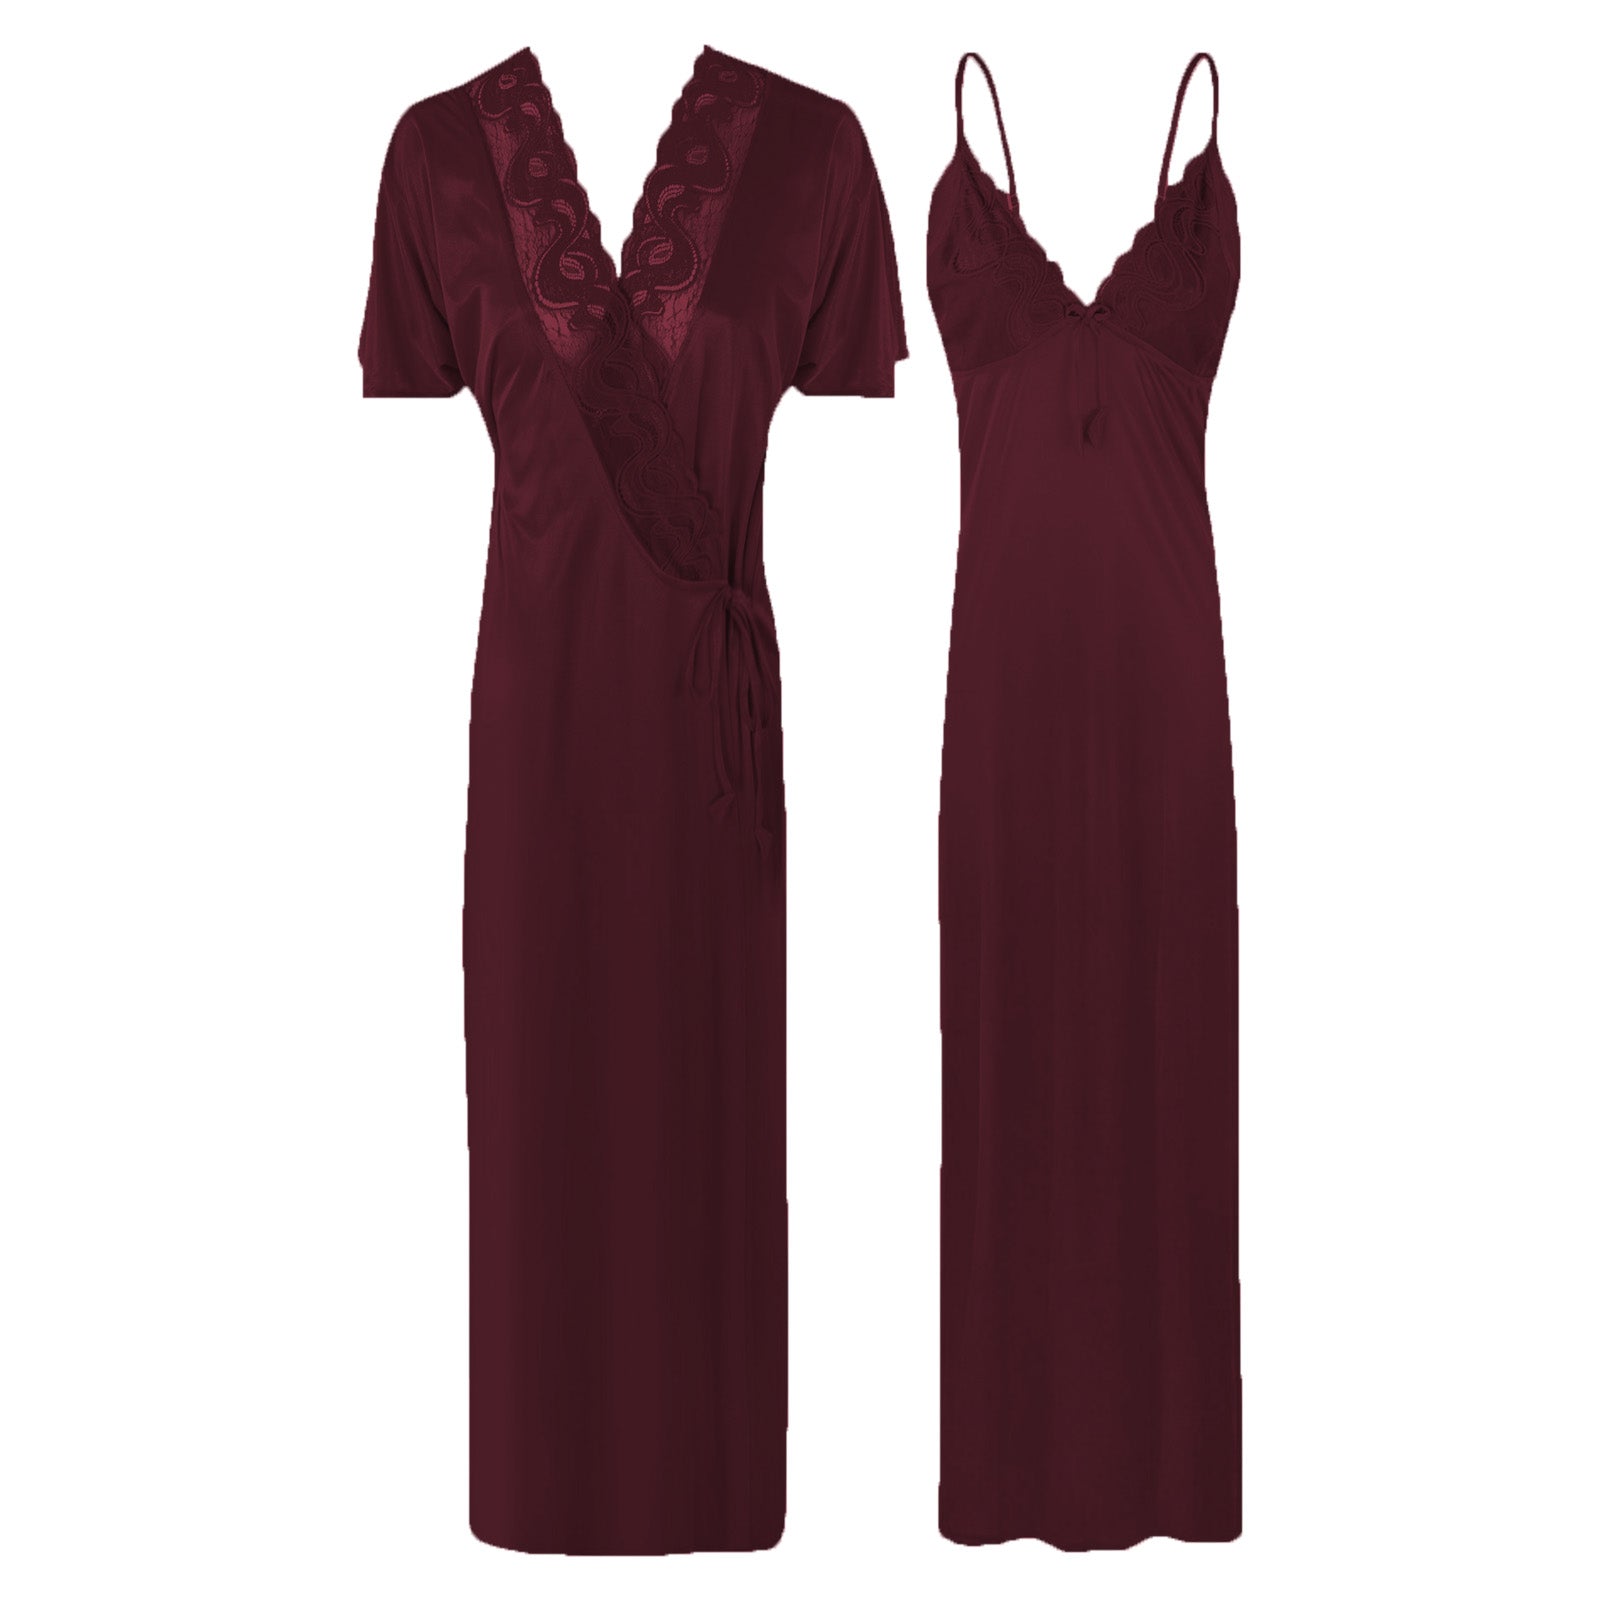 Dark Wine / One Size New Ladies Satin Long Nightdress Women Nightwear Set Lace Detailed The Orange Tags